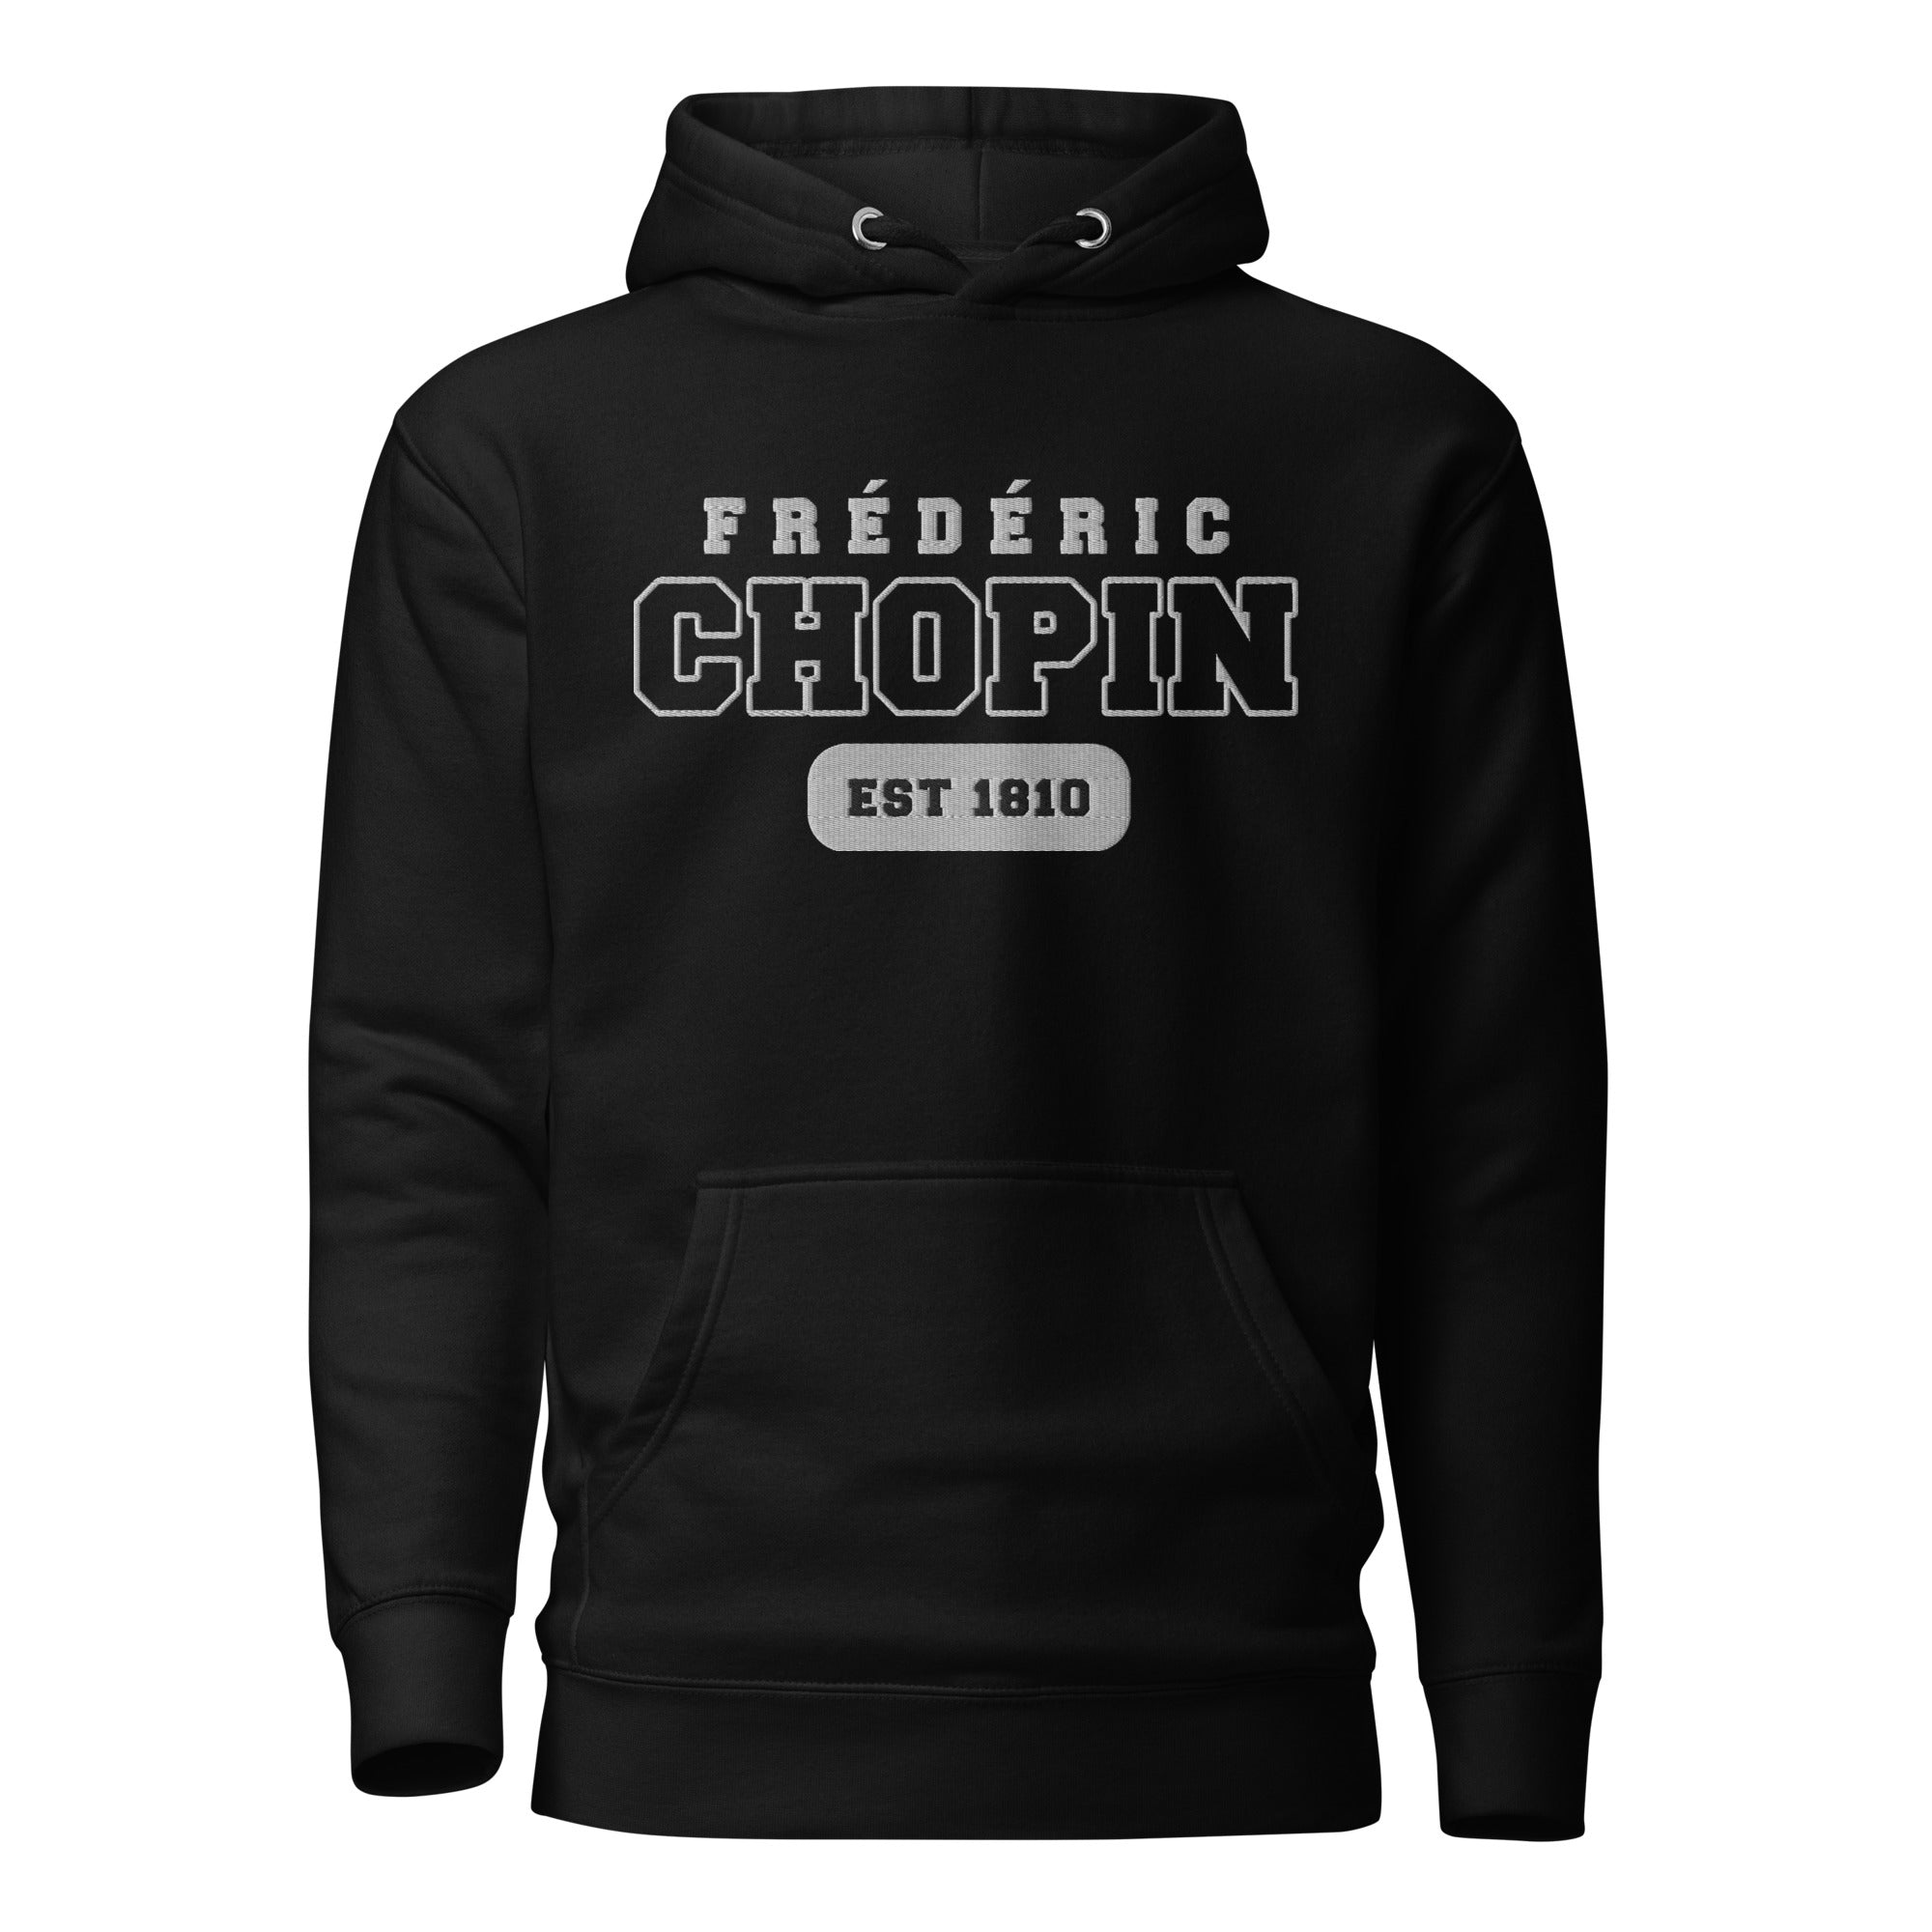 Frédéric Chopin - Premium US College Style Hoodie